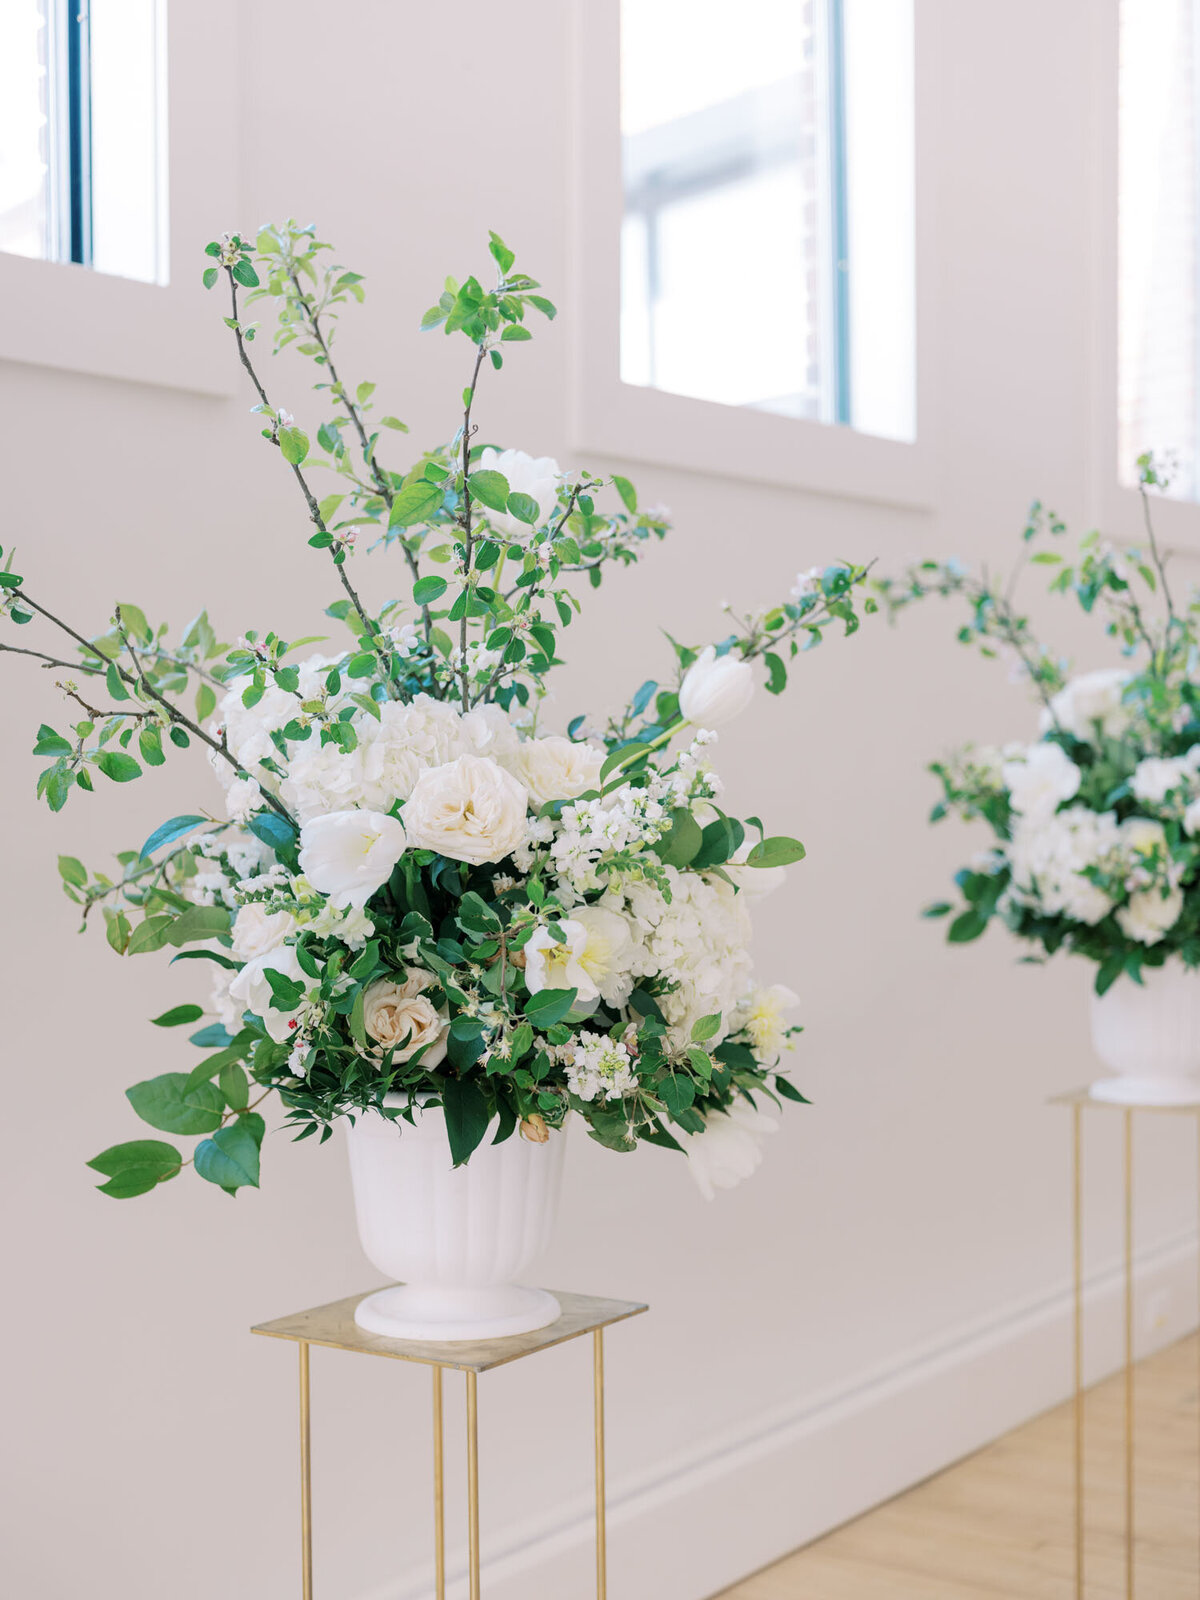 Diana Elizabeth Designs - Cleveland Wedding Florist - Gallery 7-03